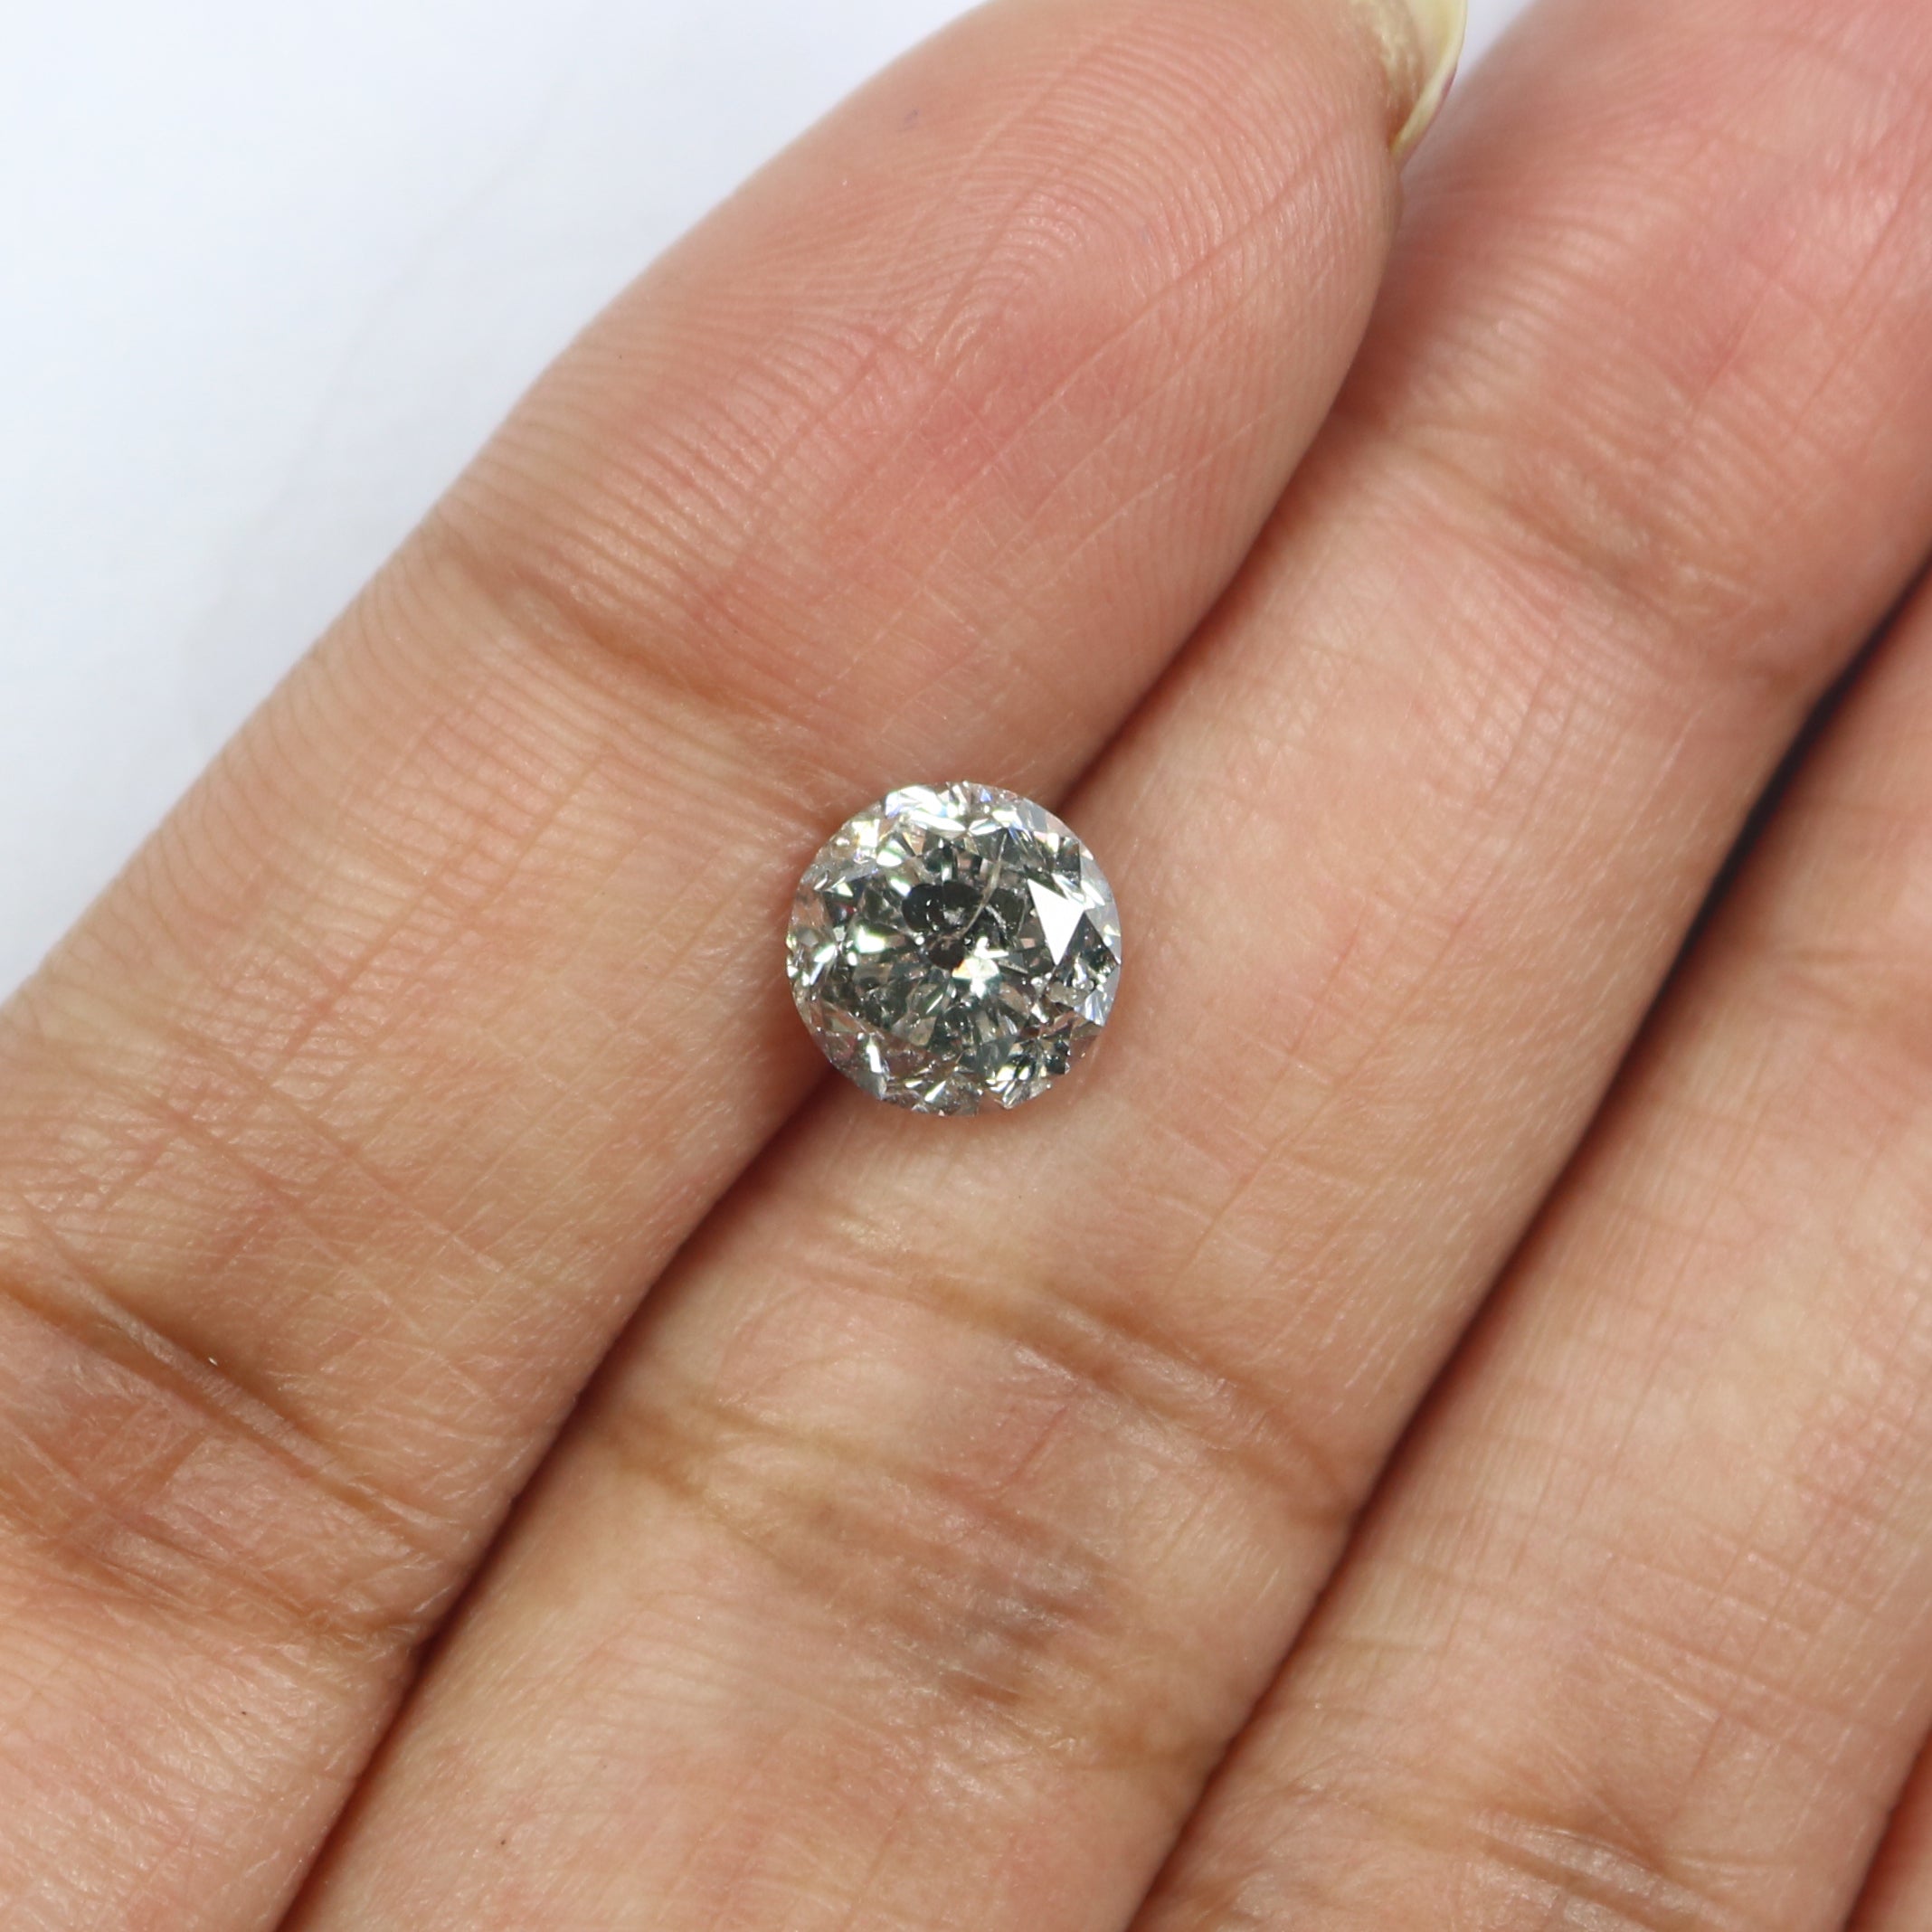 1.55 Ct Natural Loose Round Shape Diamond White - F Color Round Cut Diamond 7.05 MM Natural Loose Diamond Round Brilliant Cut Diamond QL2650